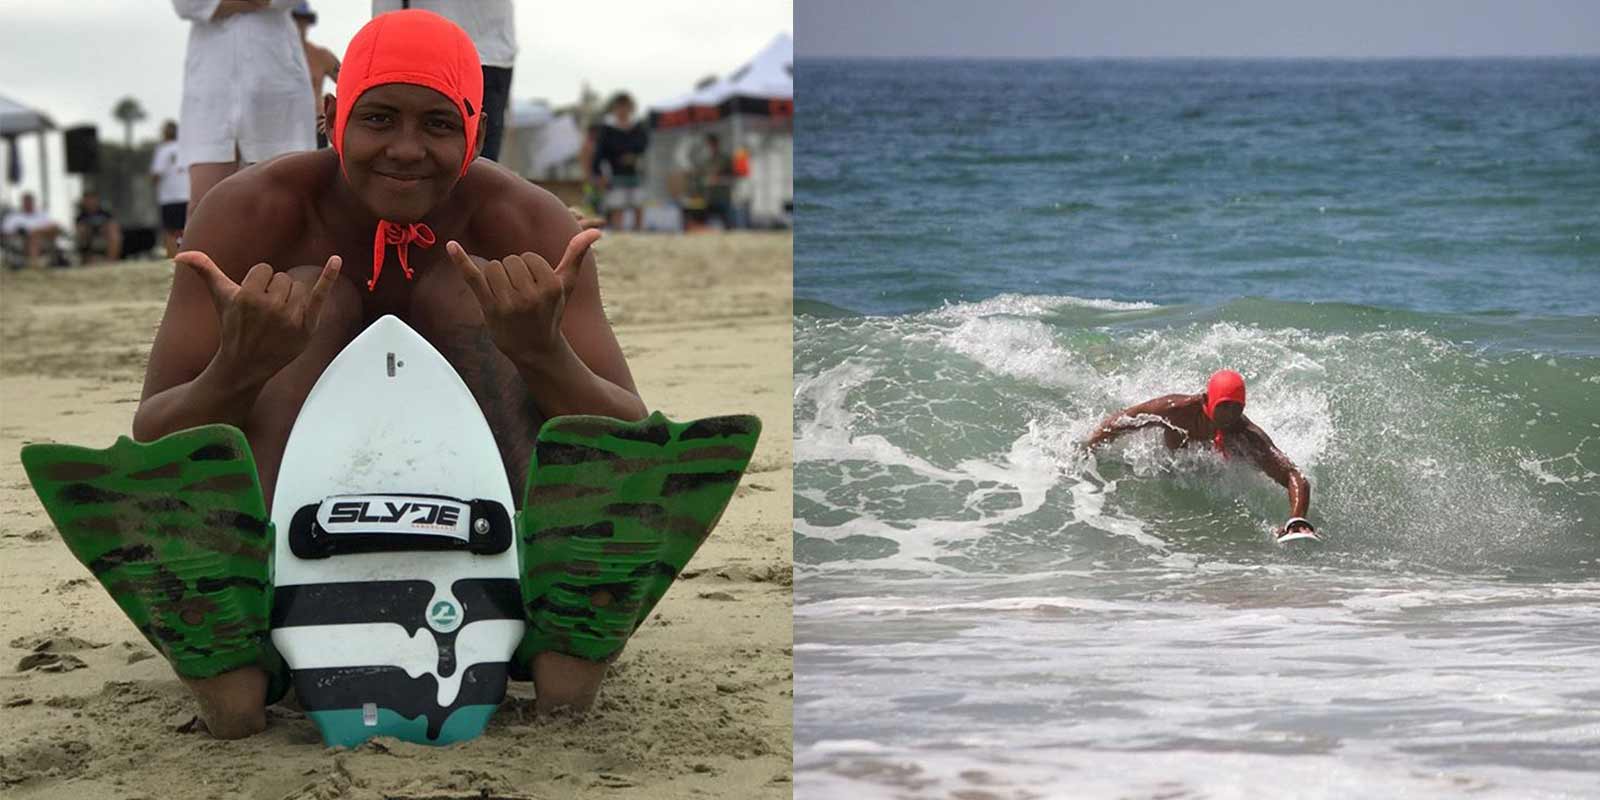 SLYDE HANDBOARDS: Chubascos Bodysurfing Huntington Beach CA 2017 RECAP